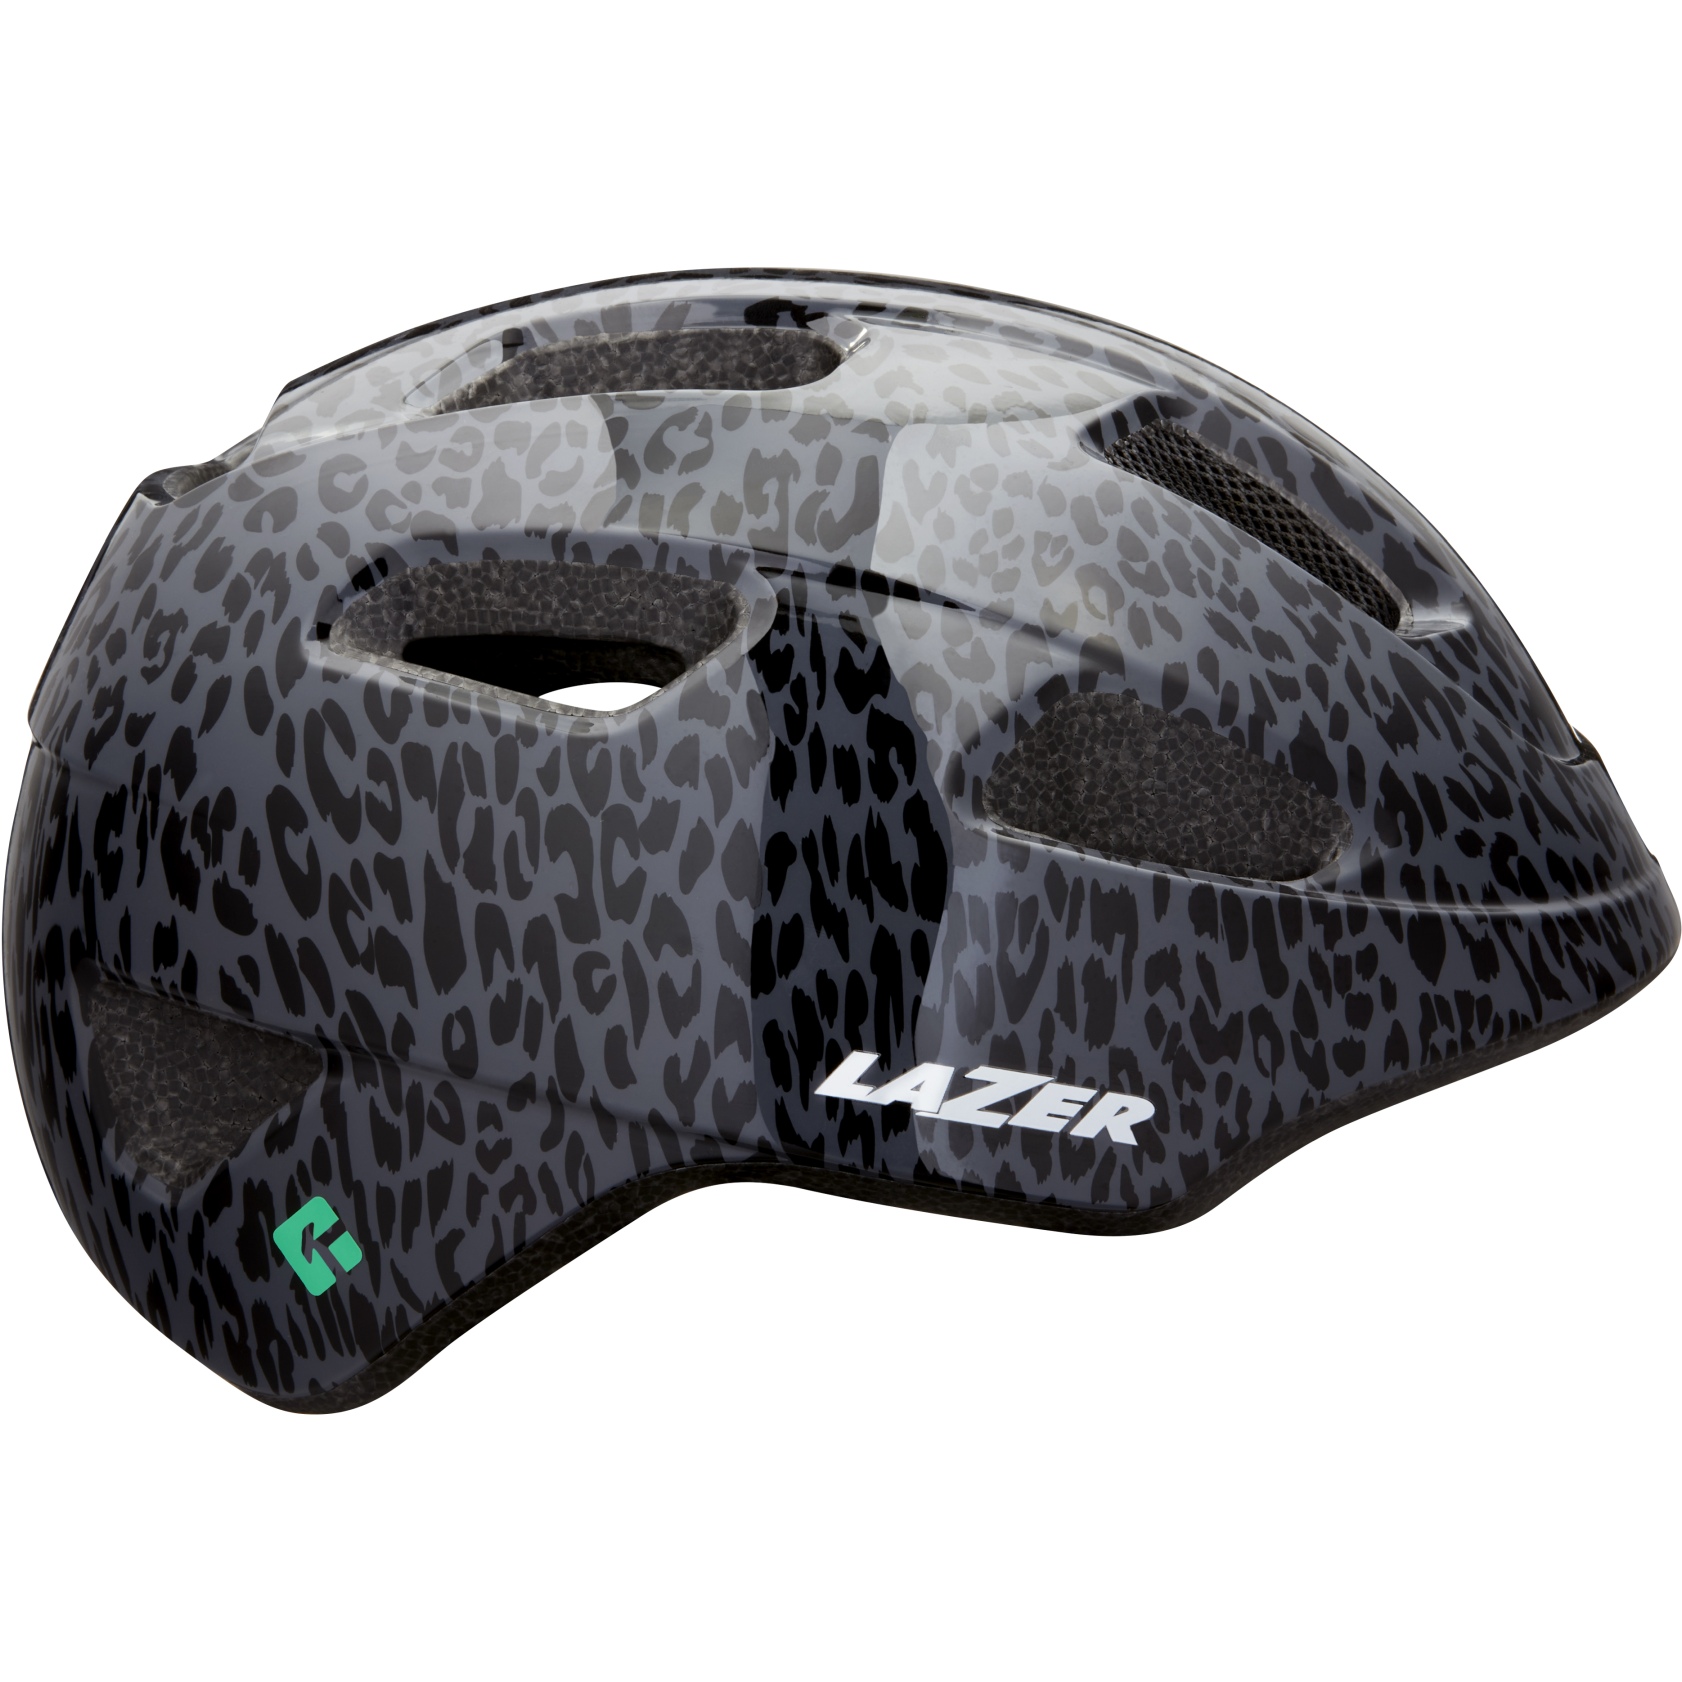 Productfoto van Lazer Nutz KinetiCore Kinder-Fietshelm - black leopard